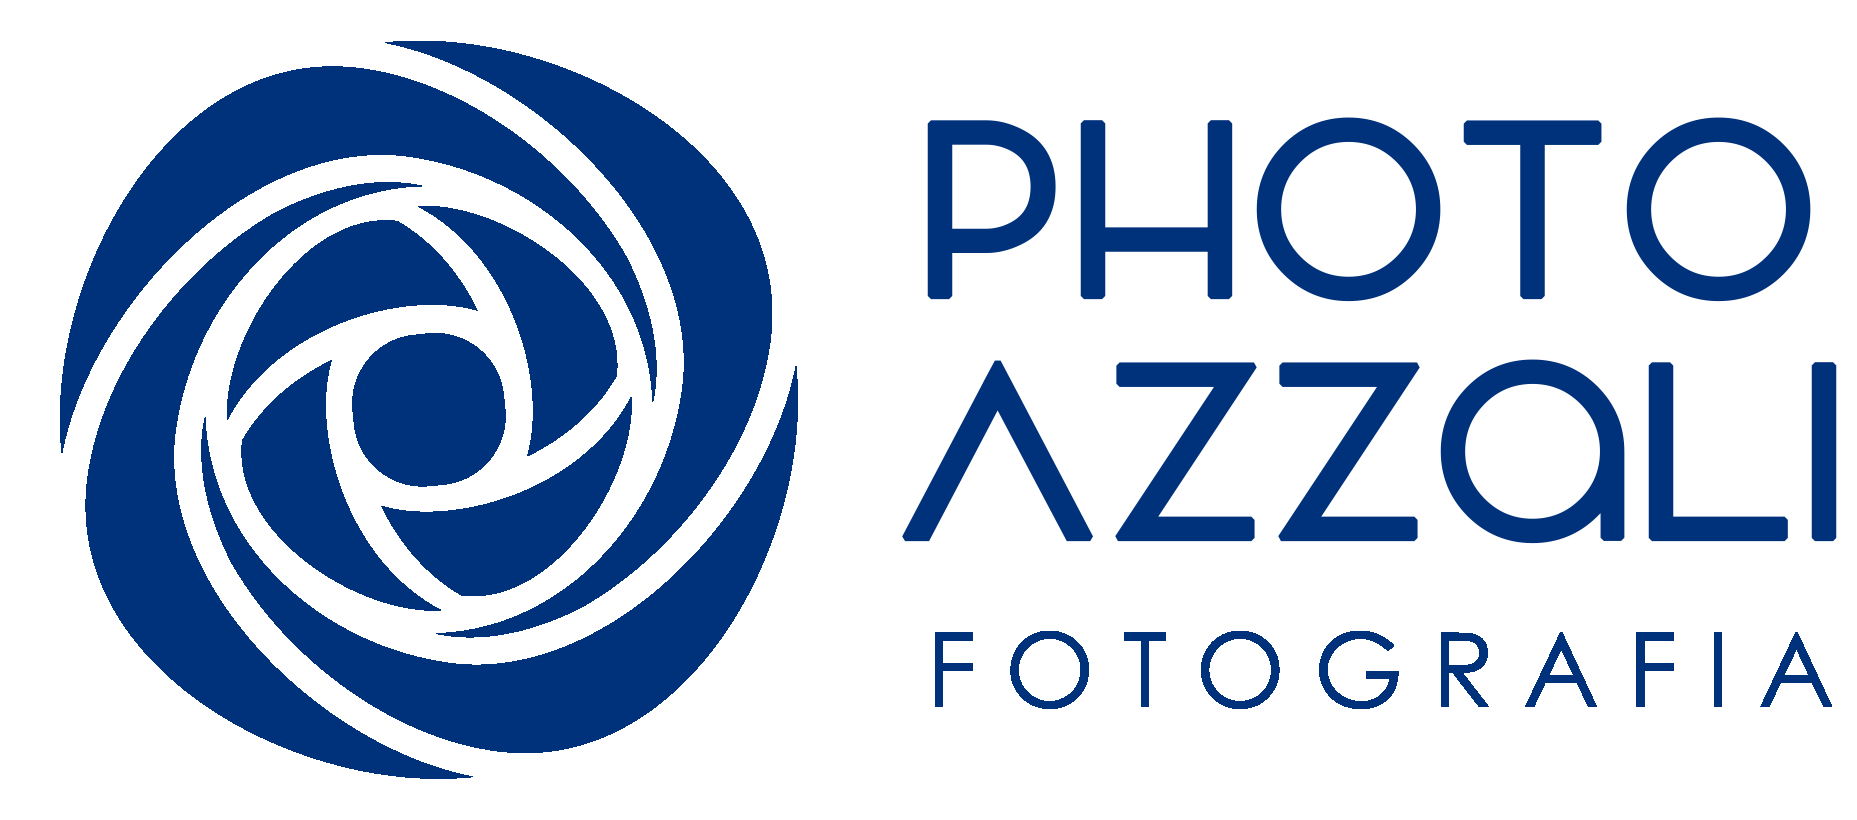 PhotoAzzali